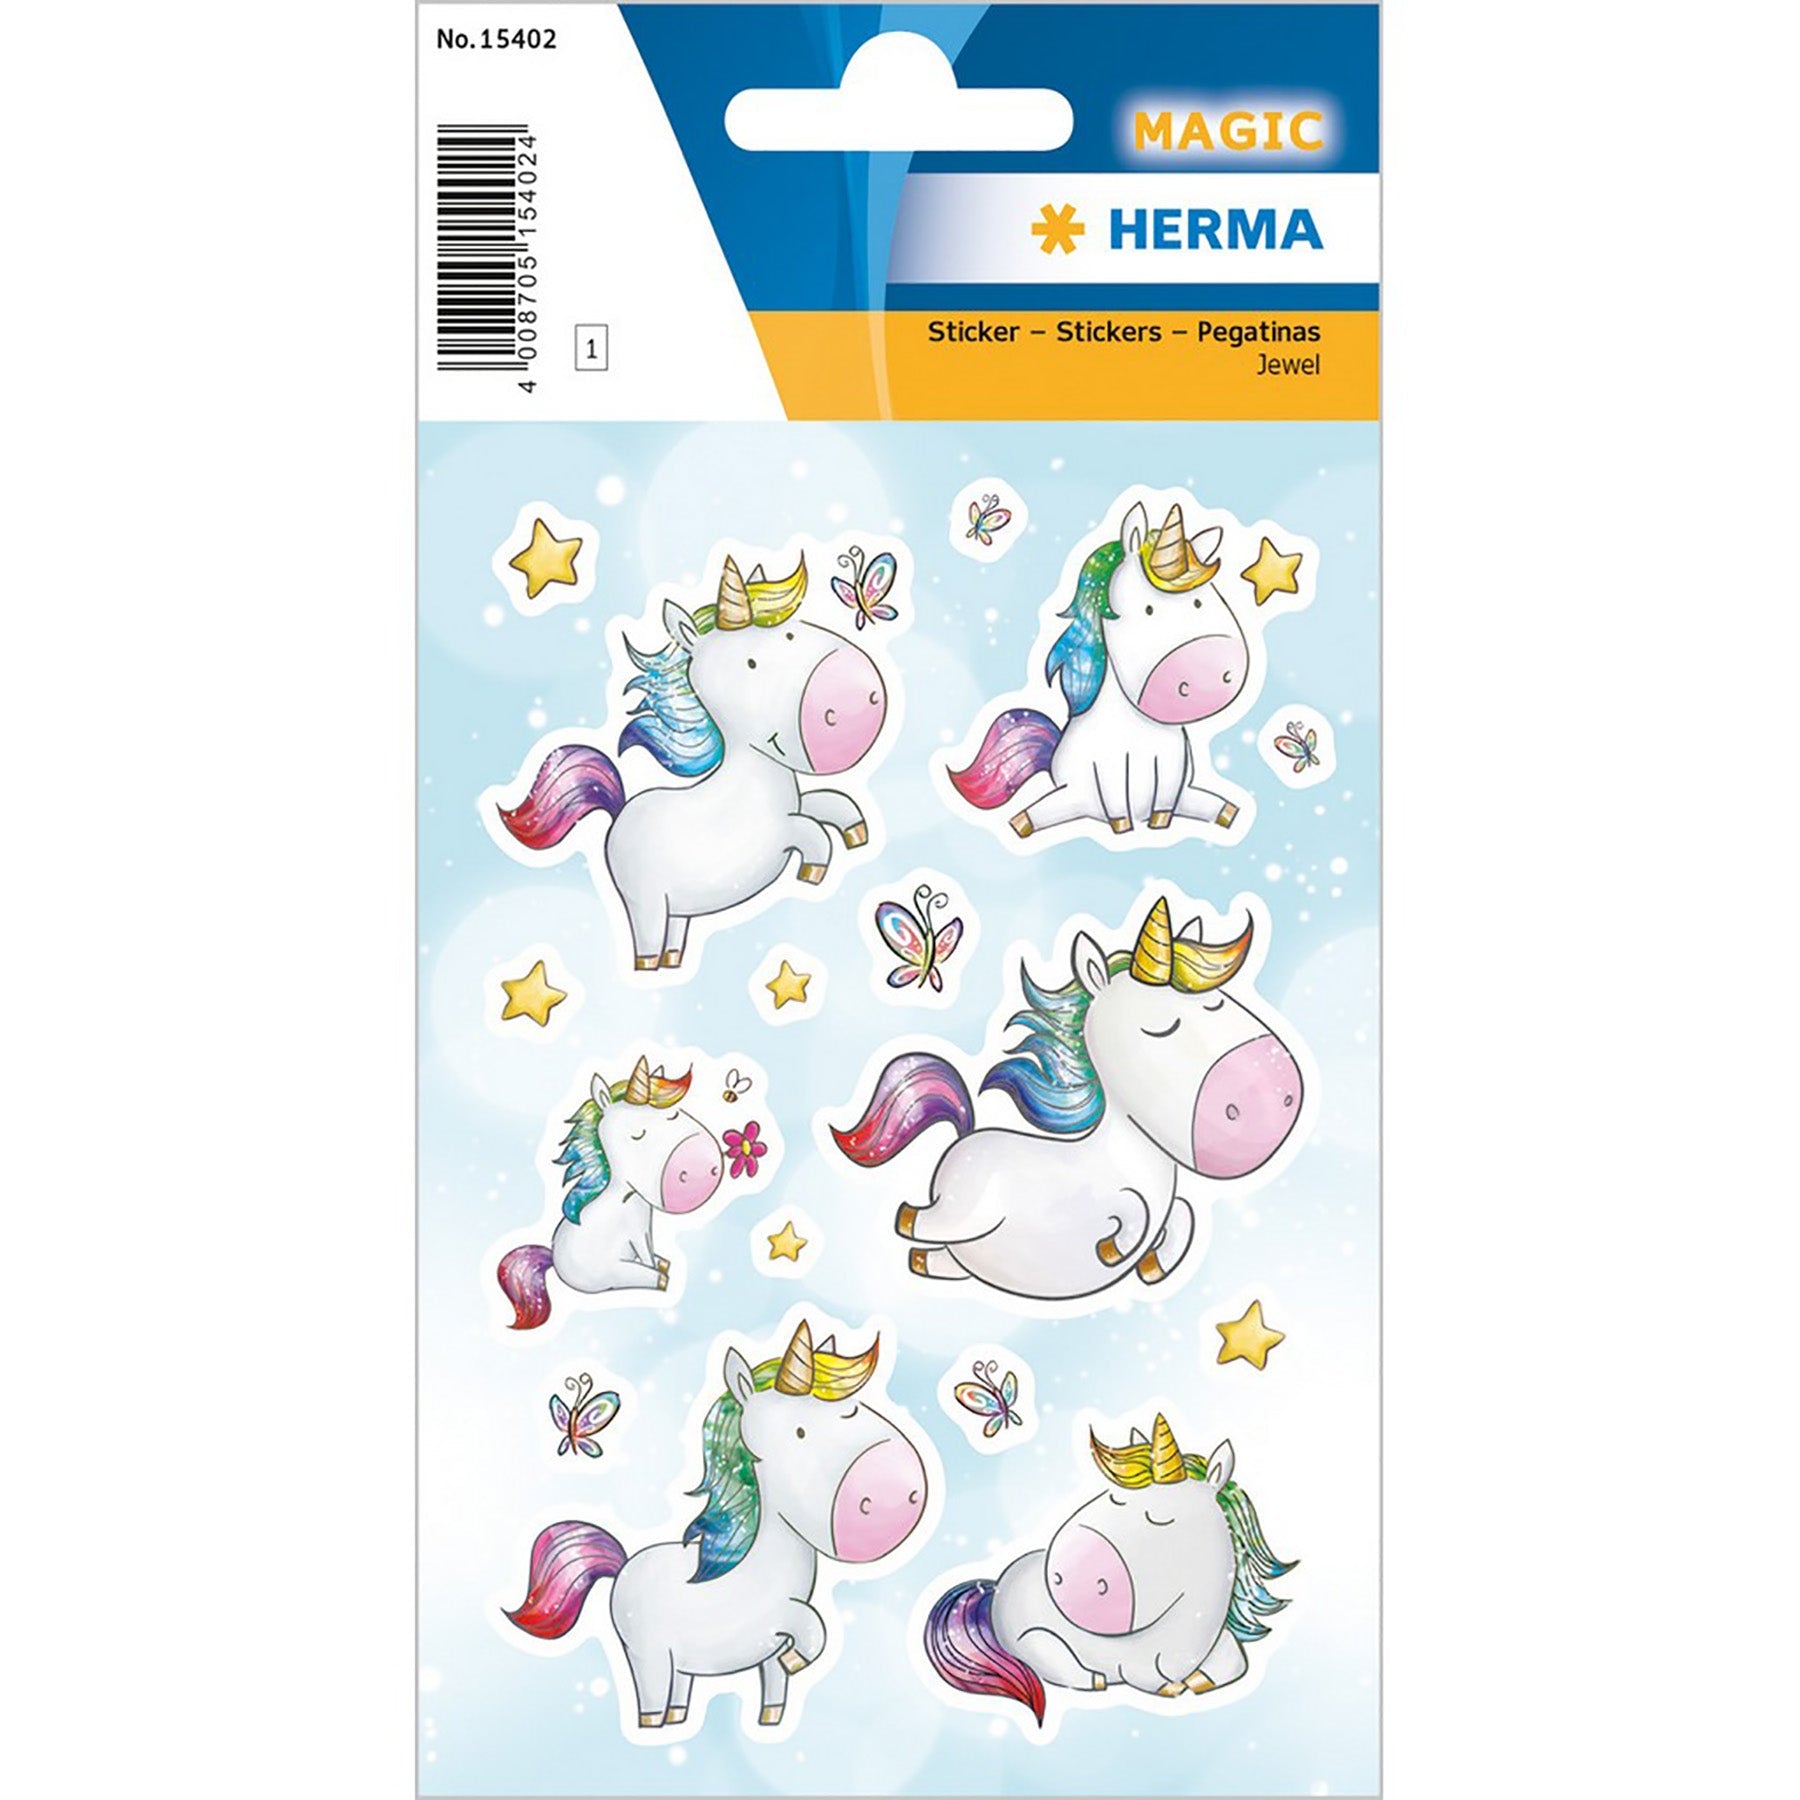 Herma Magic Stickers Unicorn Stardust with Jewel 4.75x3.1in Sheet